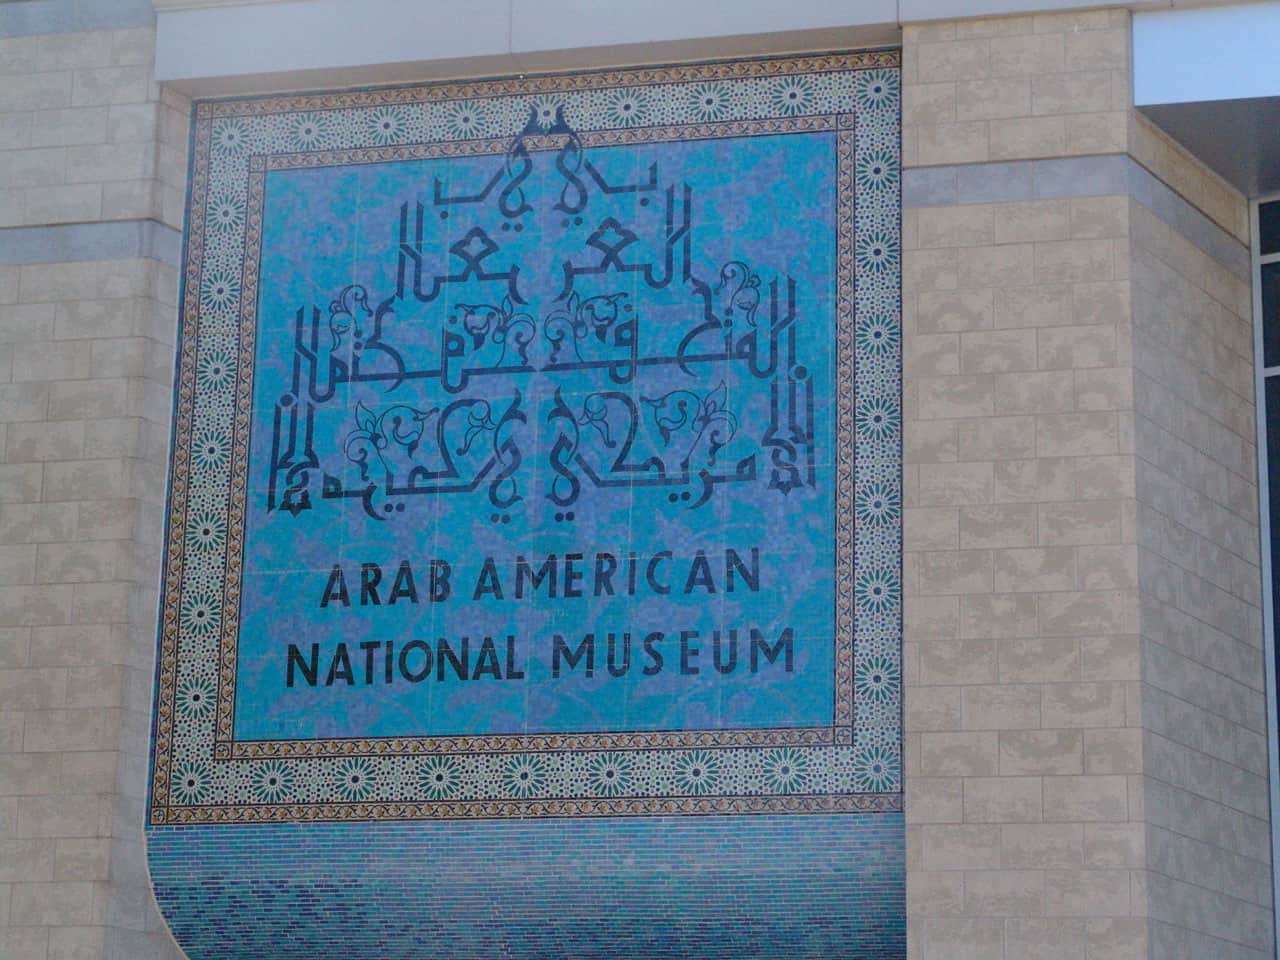 Arab American National Museum in Dearborn, Michigan